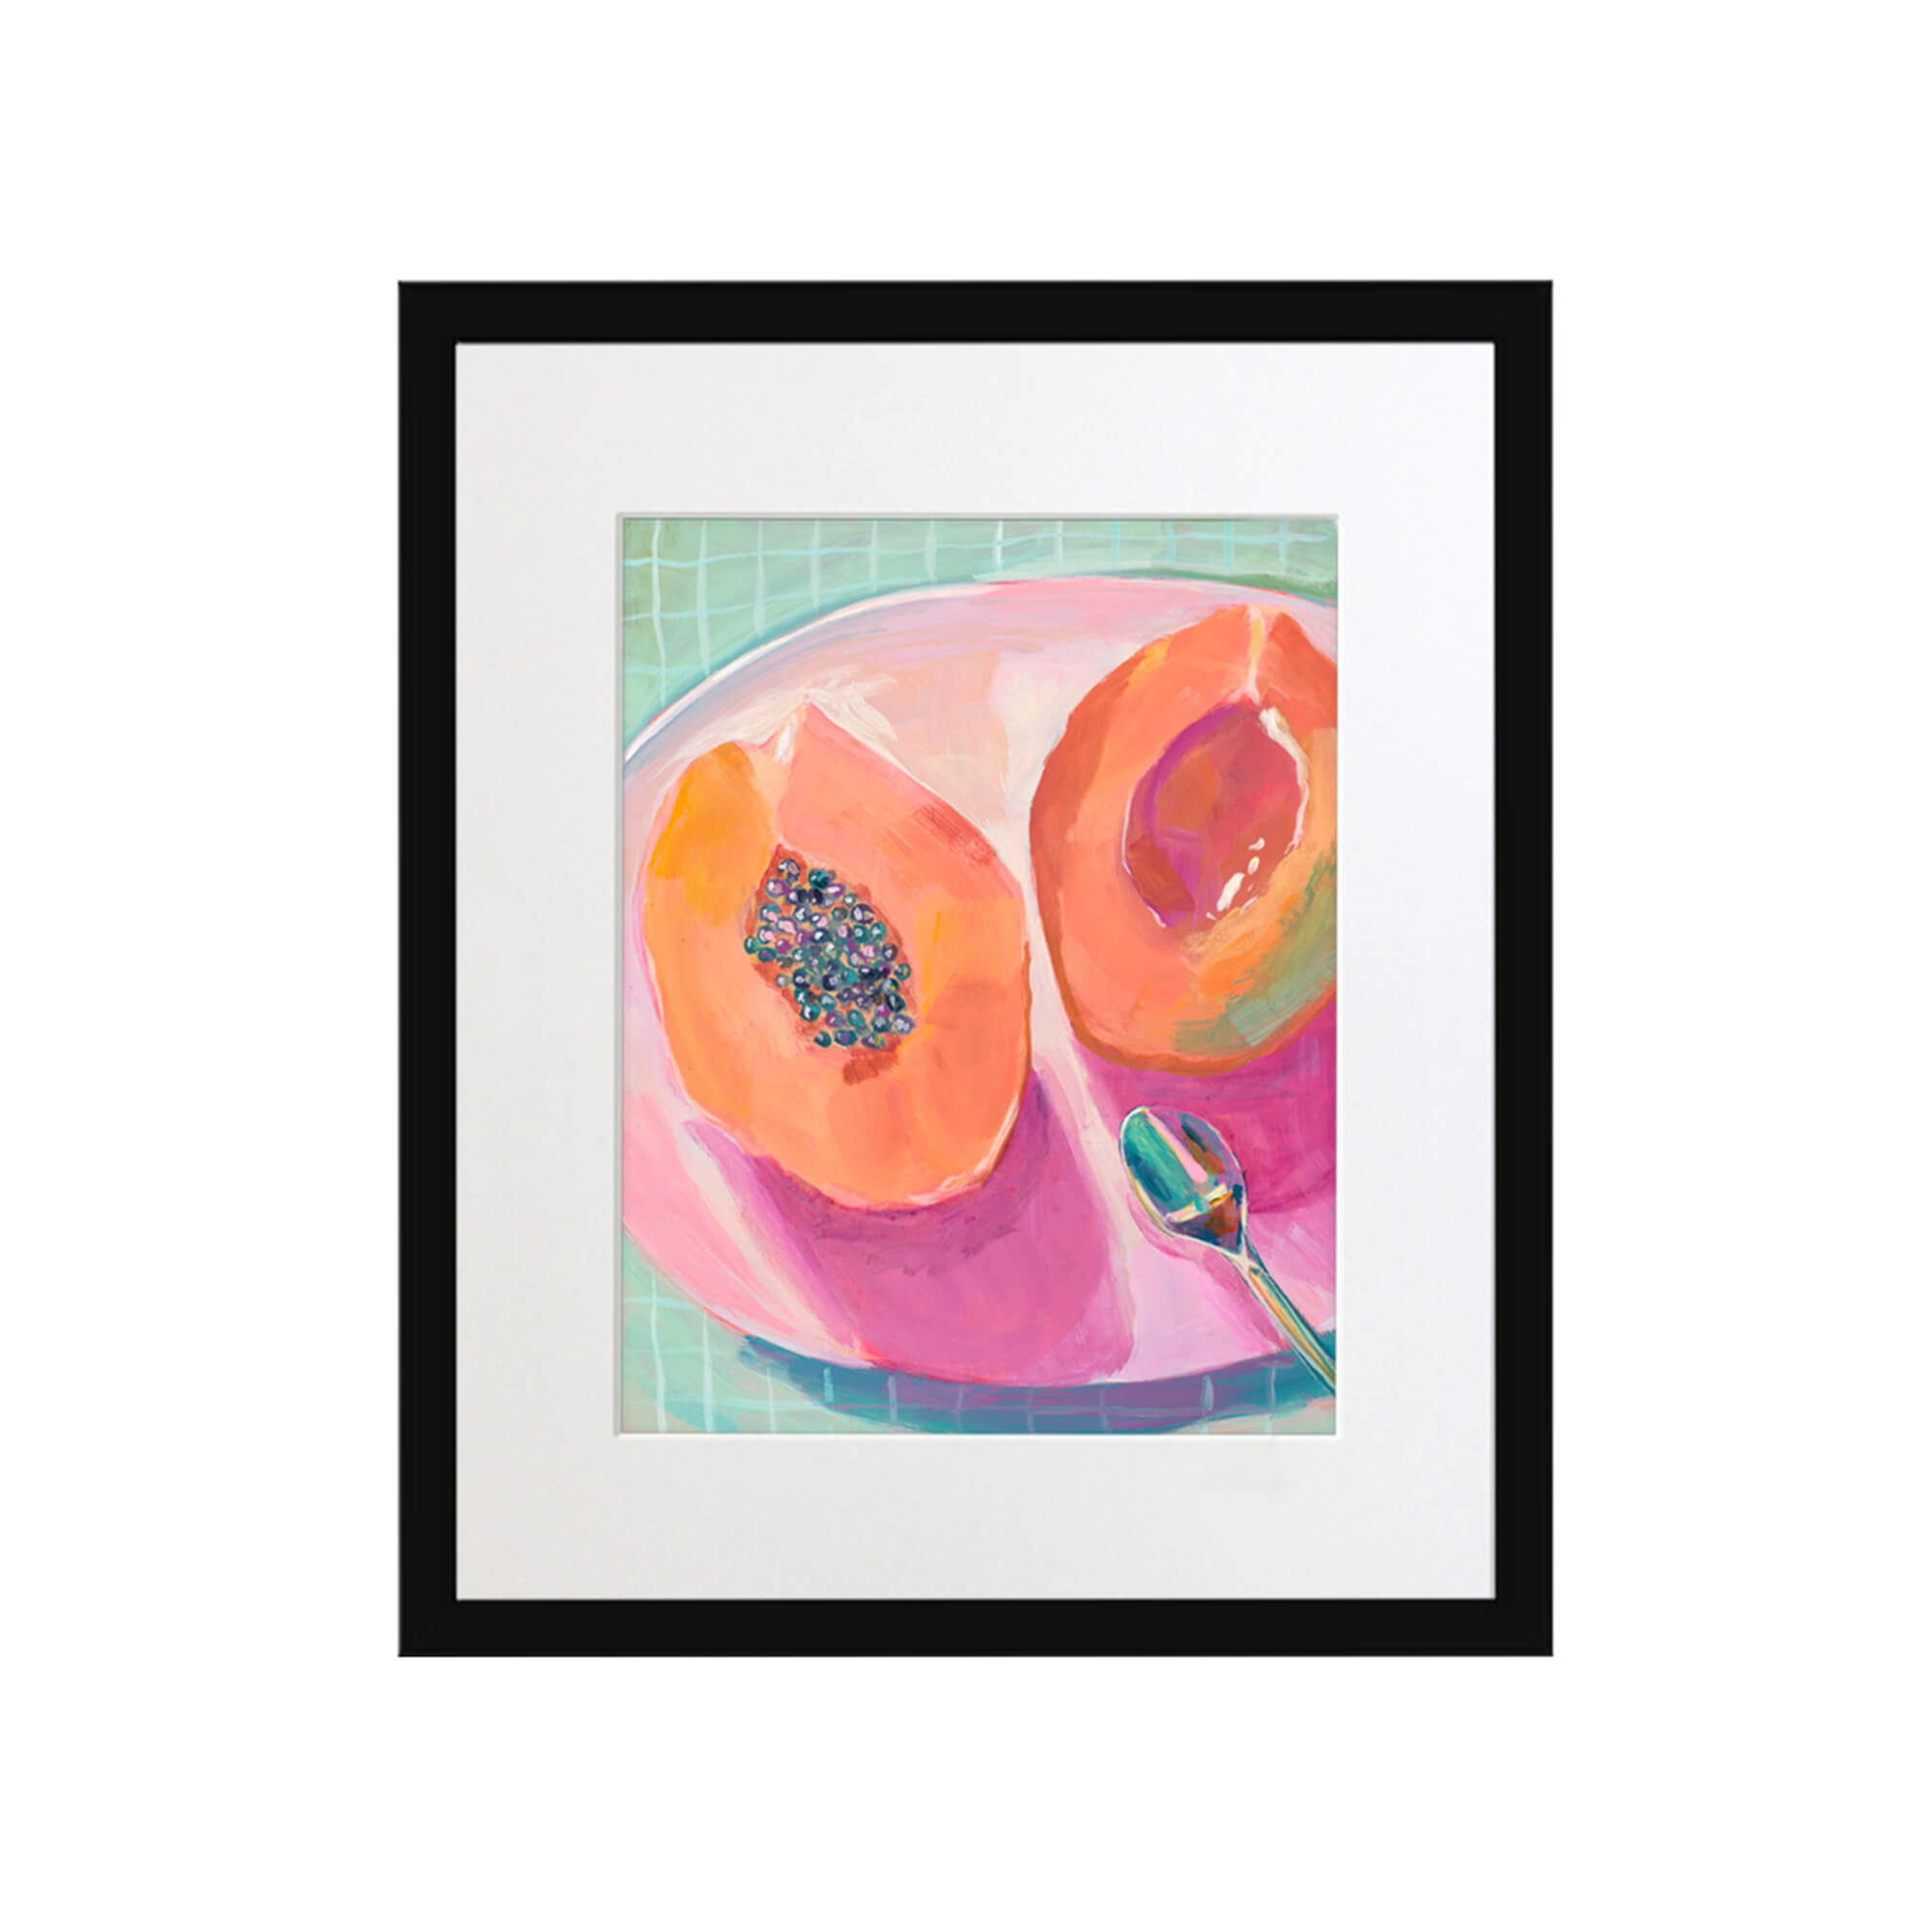 Papaya on a pink plate by Hawaii artist Lindsay Wilkins